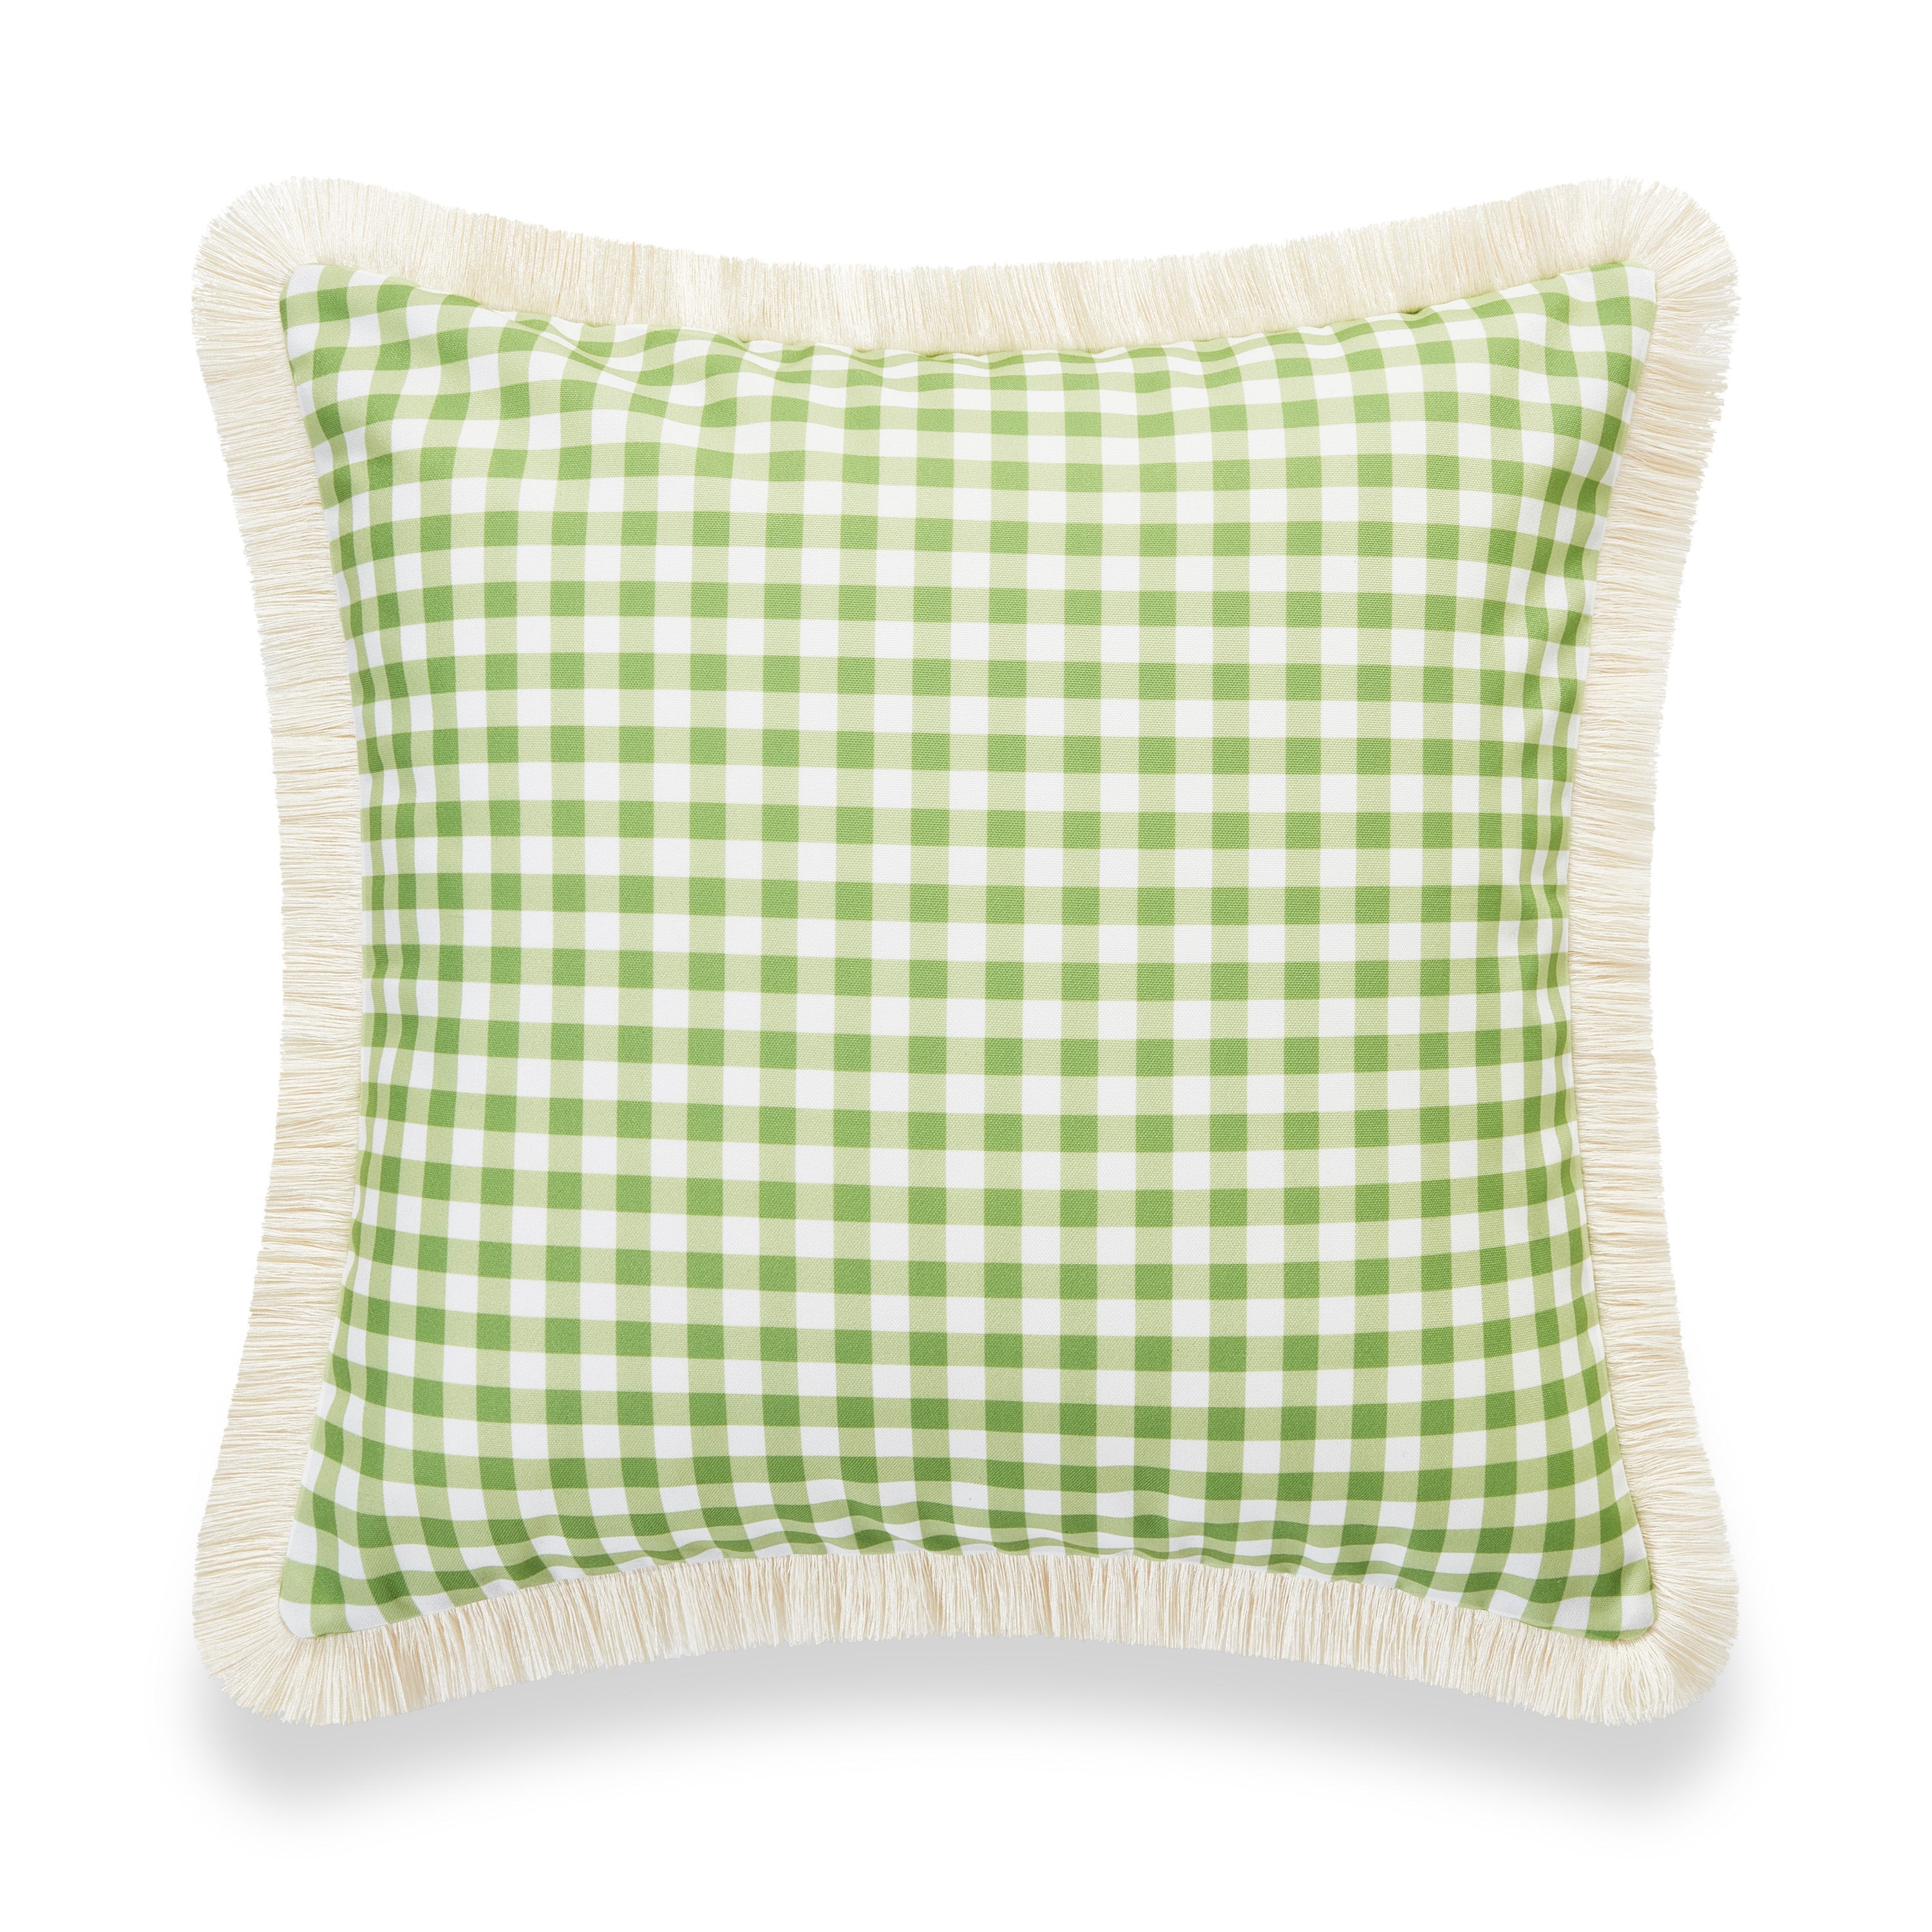 Coastal Indoor Outdoor Pillow Cover, Gingham Fringe, Green, 20"x20"